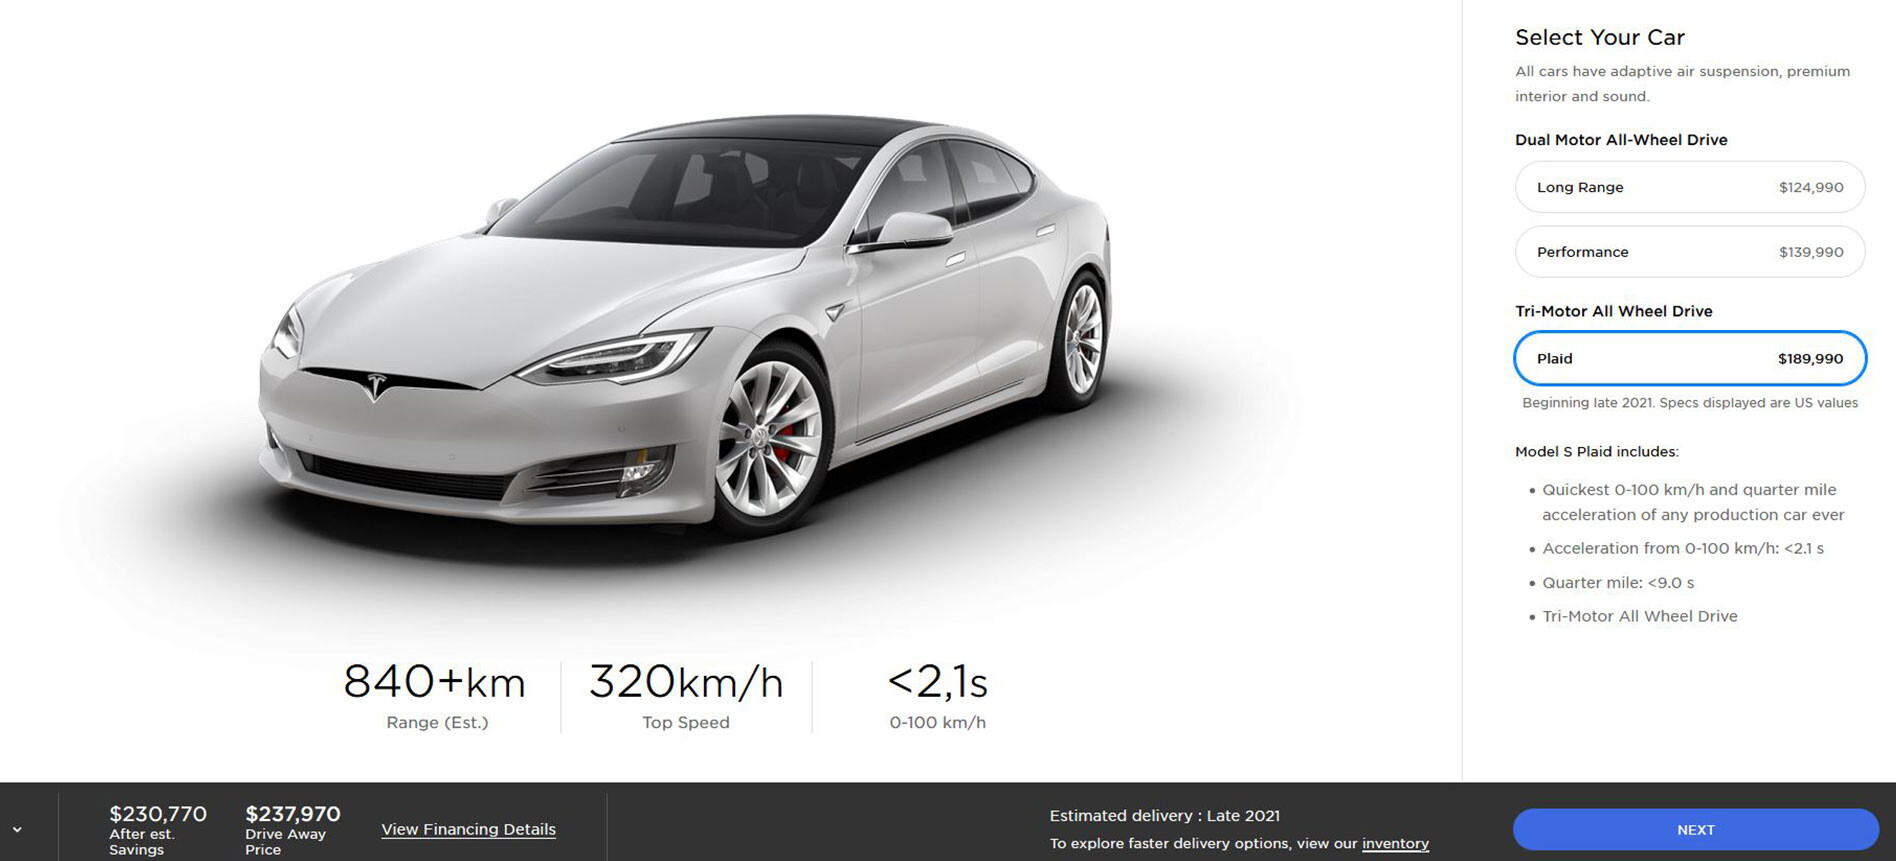 Dwang verontschuldiging zaterdag Tesla Model S replacement still more than five years away